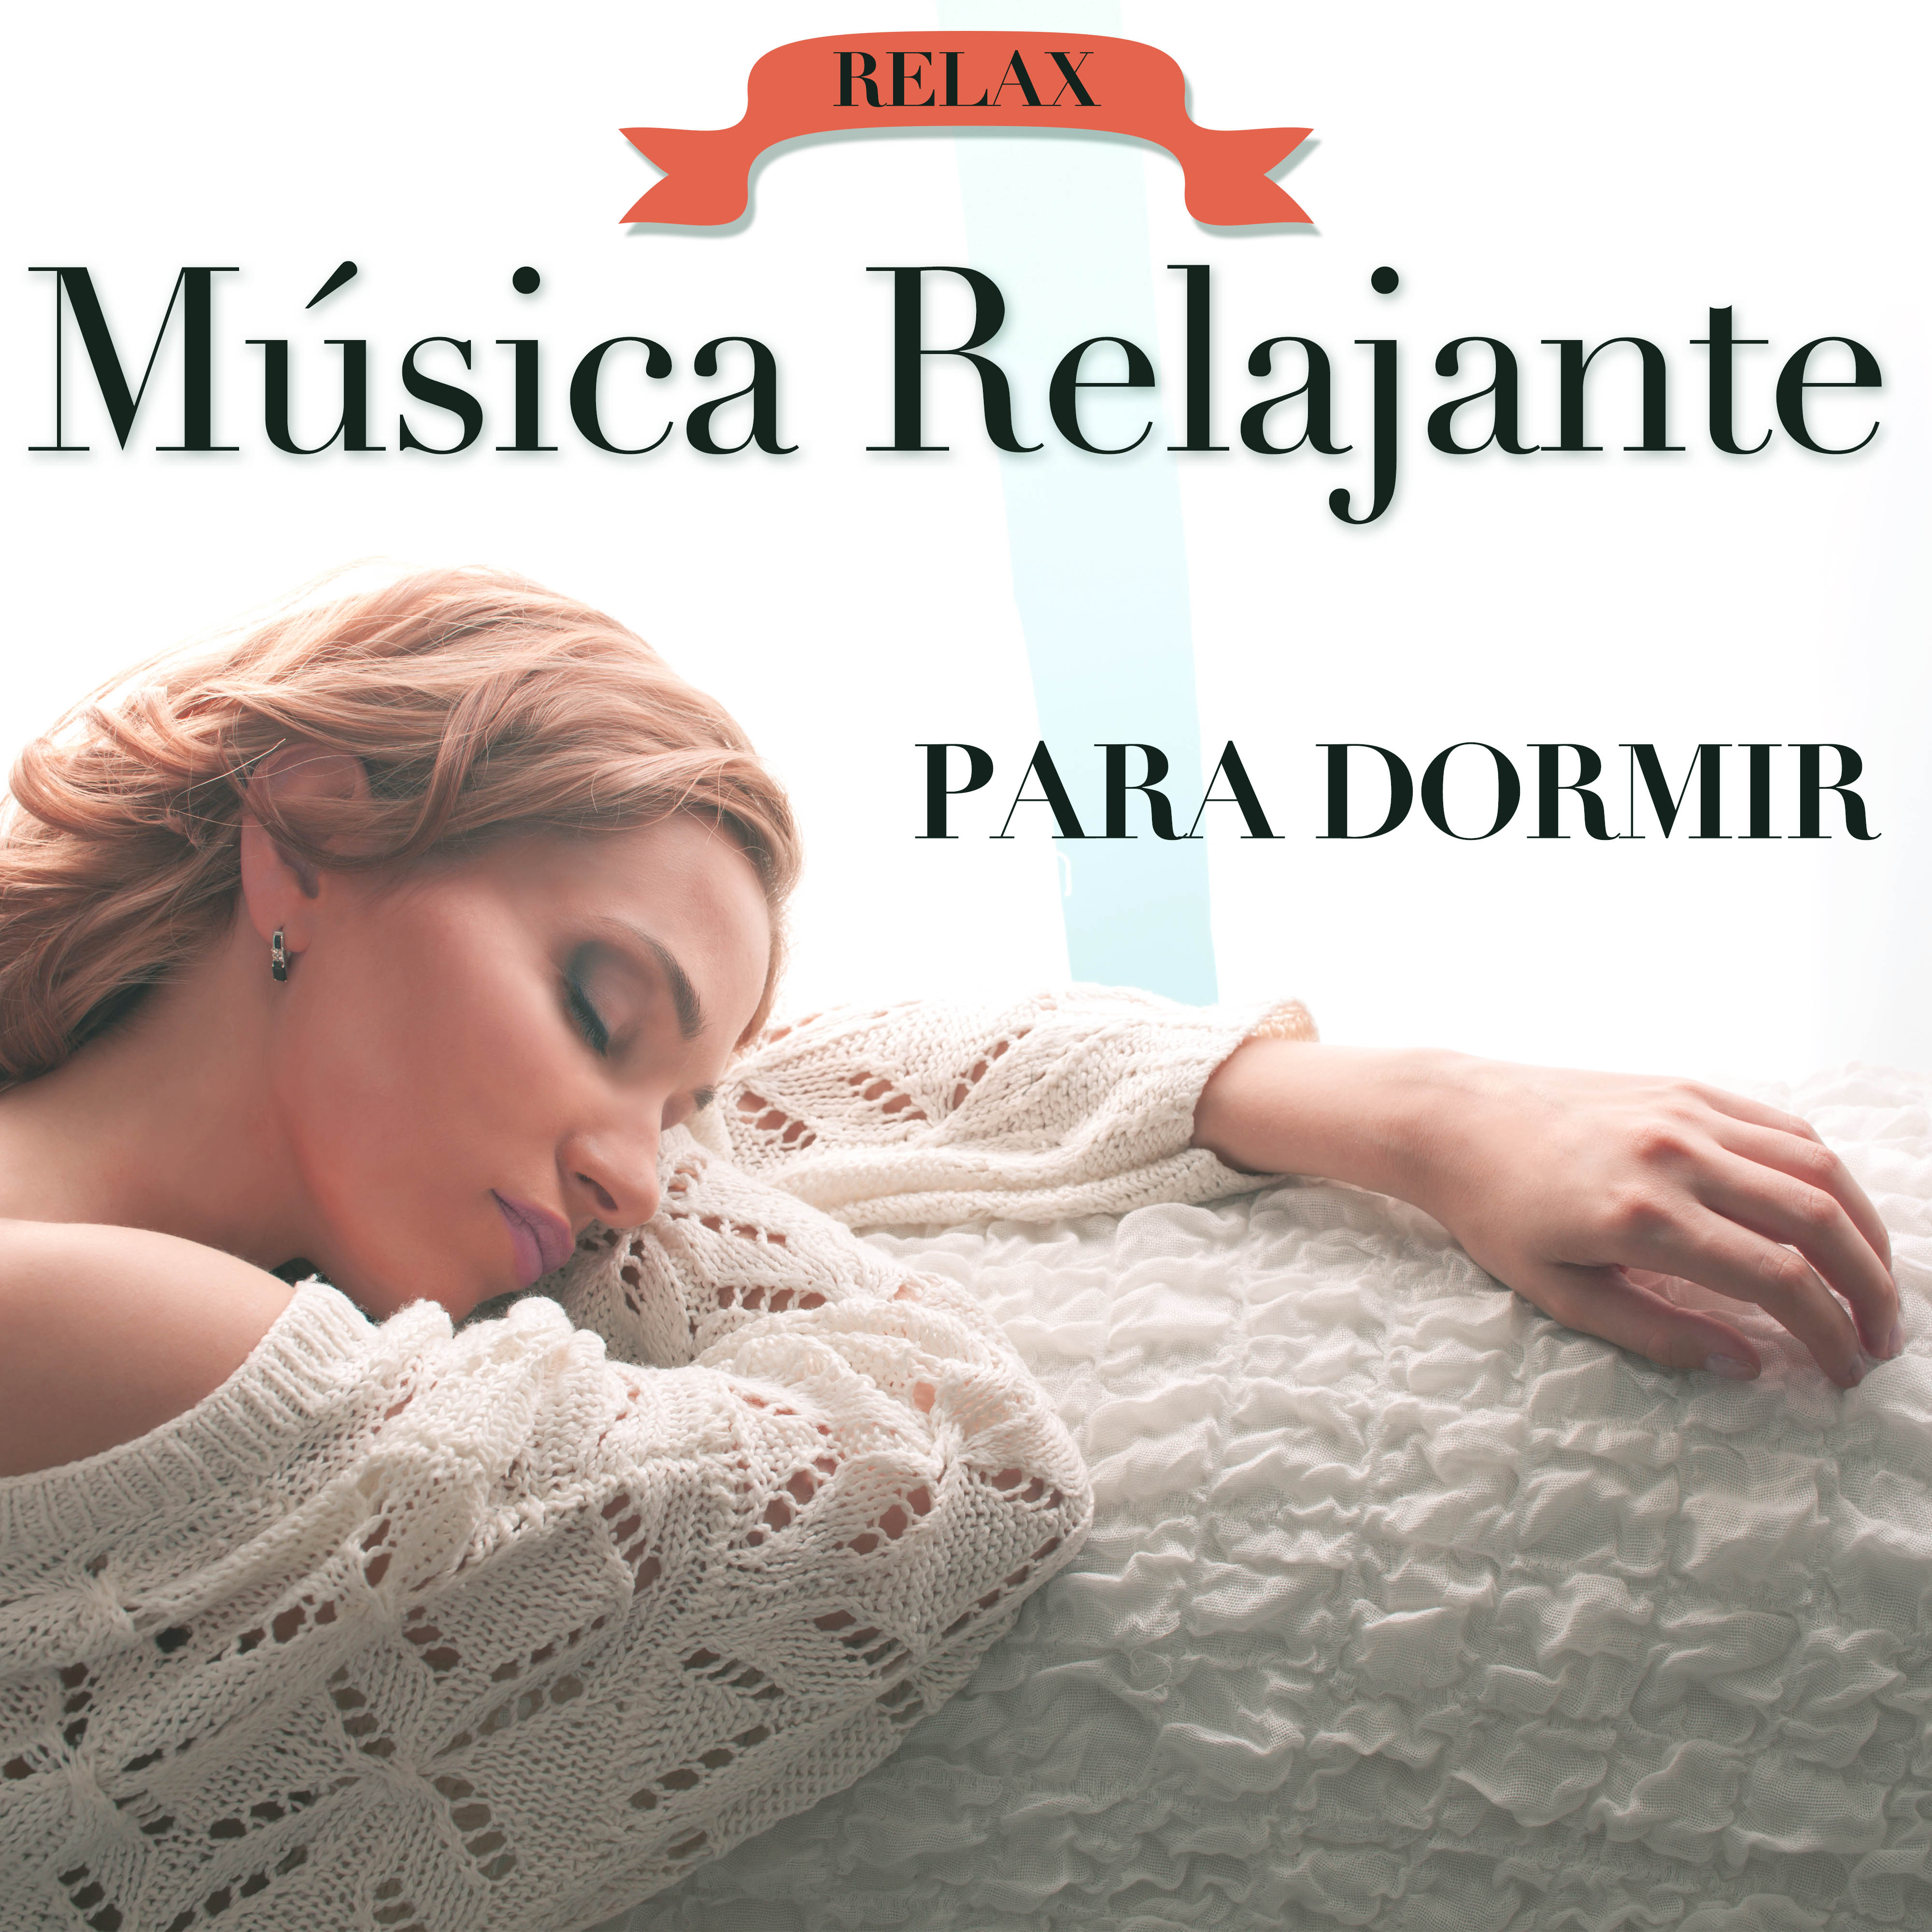 Música Relajante para Dormir - Música Clásica Católica de Relajación